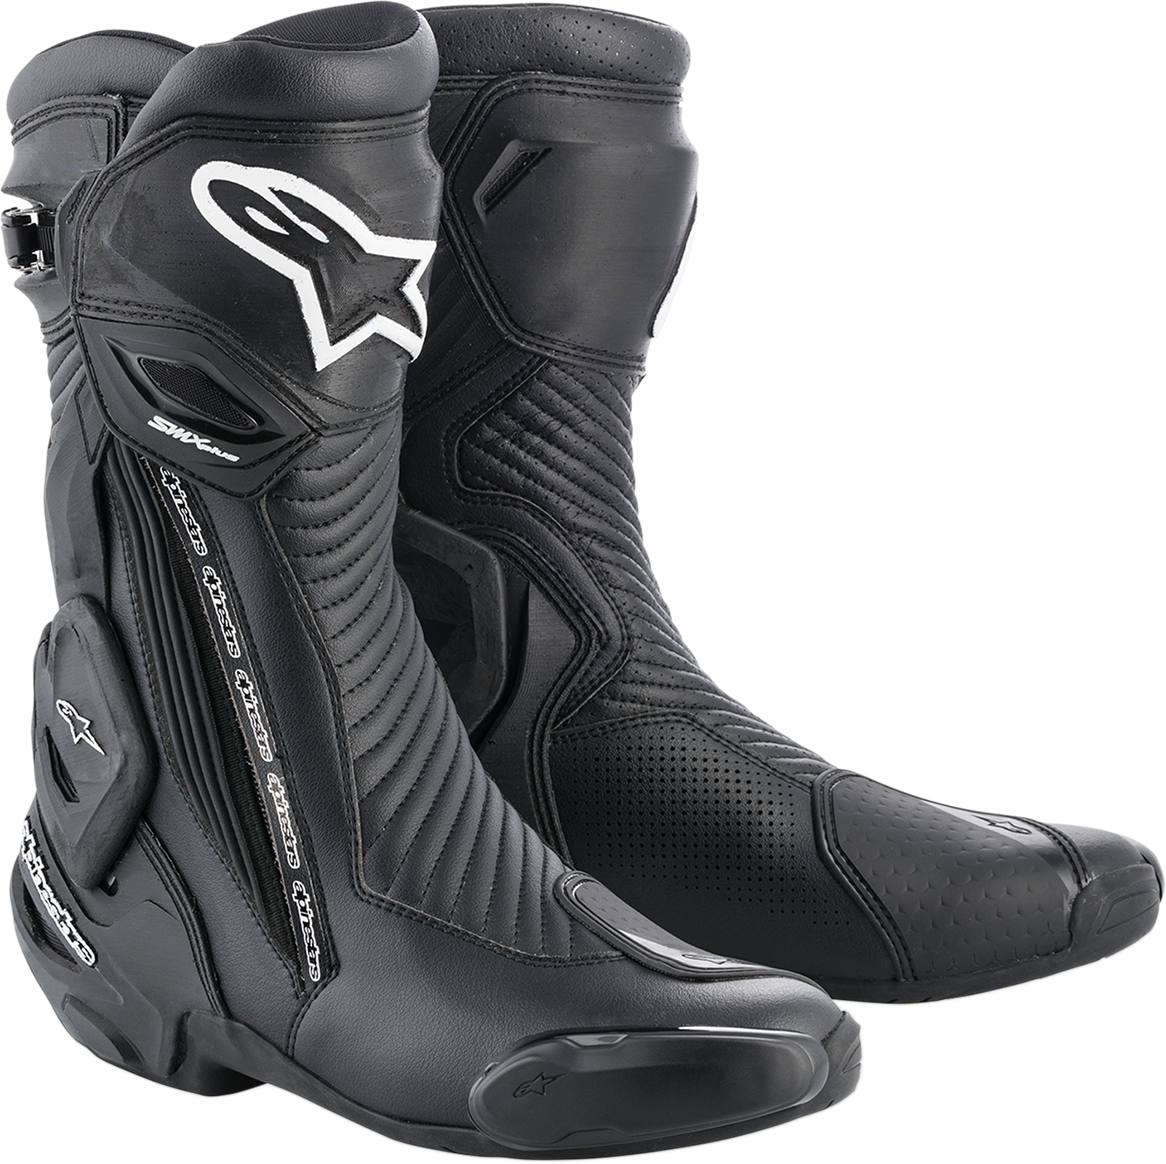 ALPINESTARS SMX+ Boots - Black - US 5 / EU 38 2221019-10-38